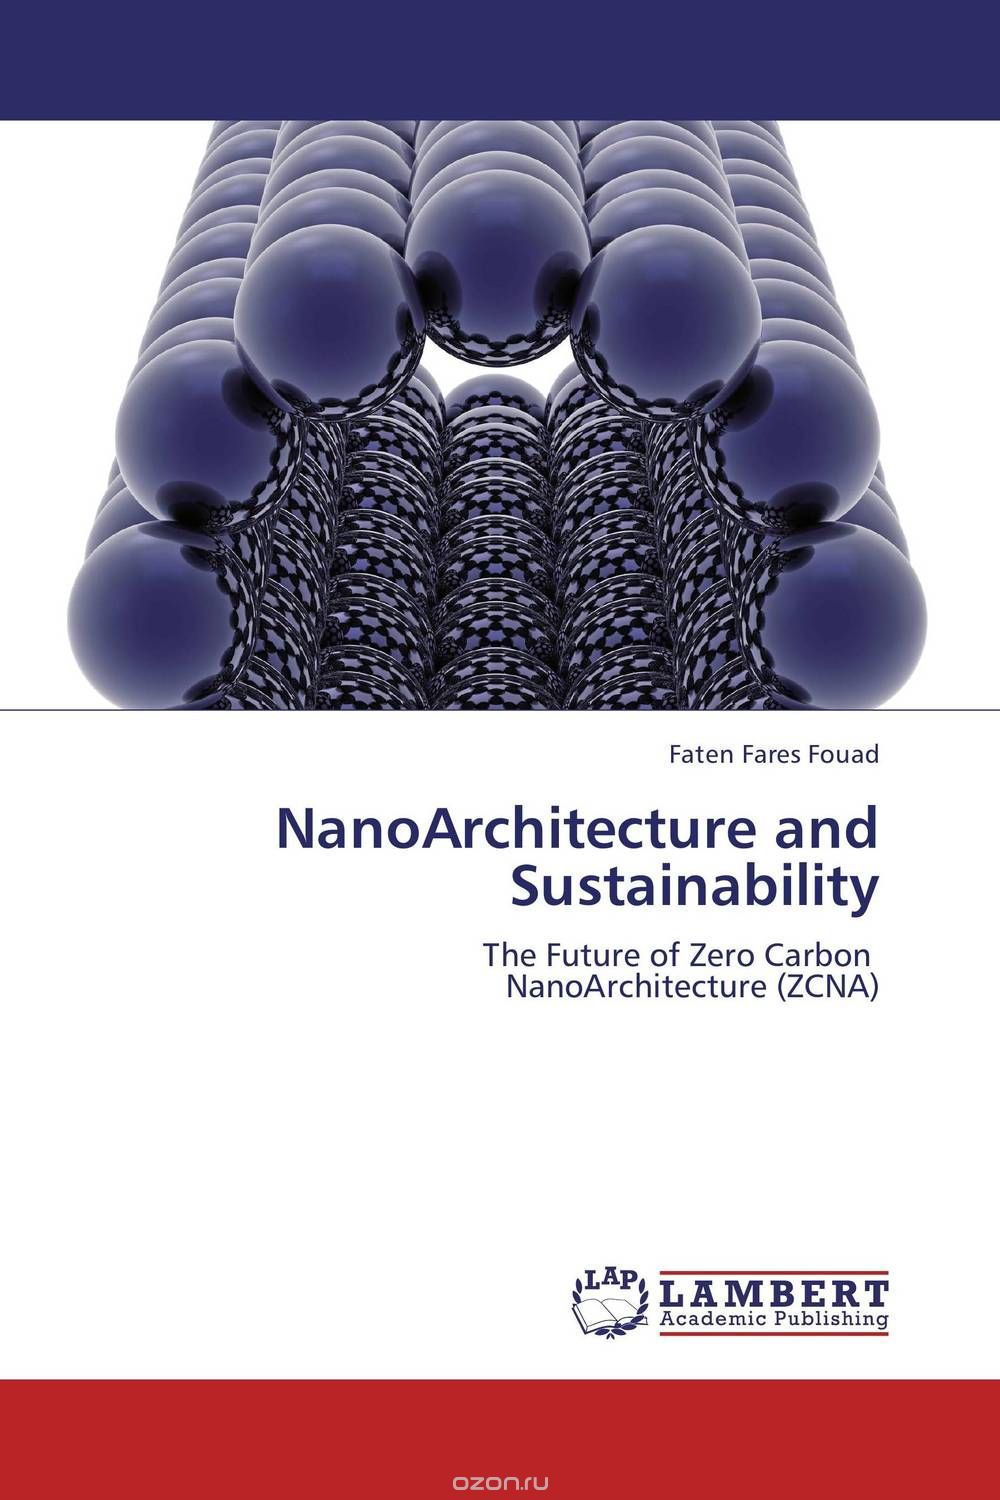 Скачать книгу "NanoArchitecture and Sustainability"